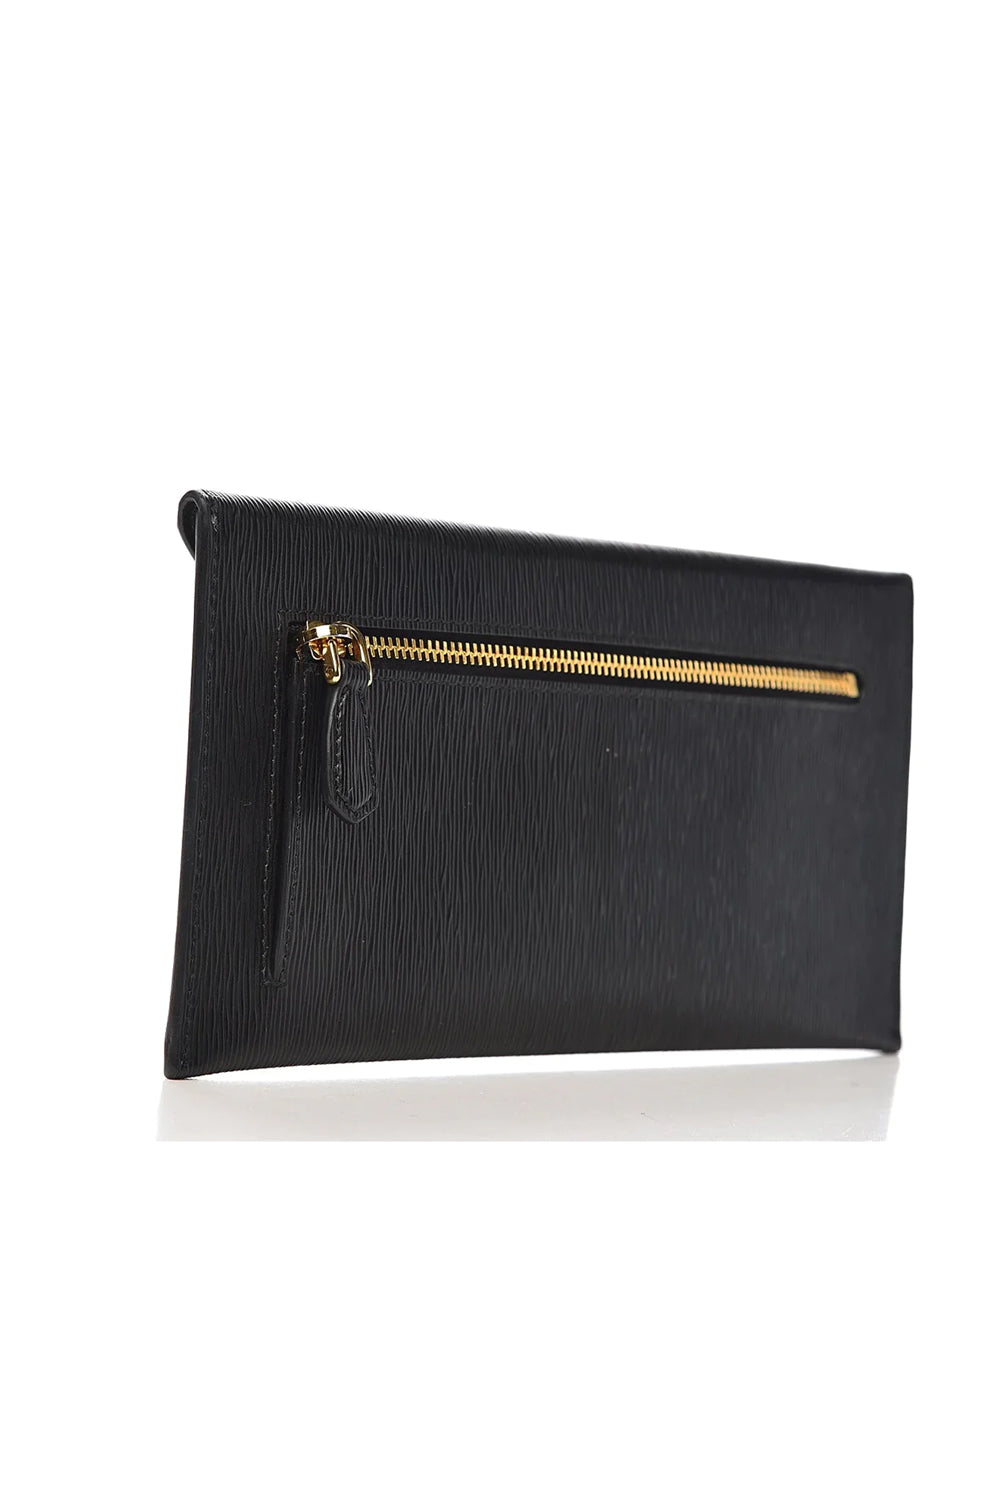 Prada Vitello Move Leather Long Envelope Wallet